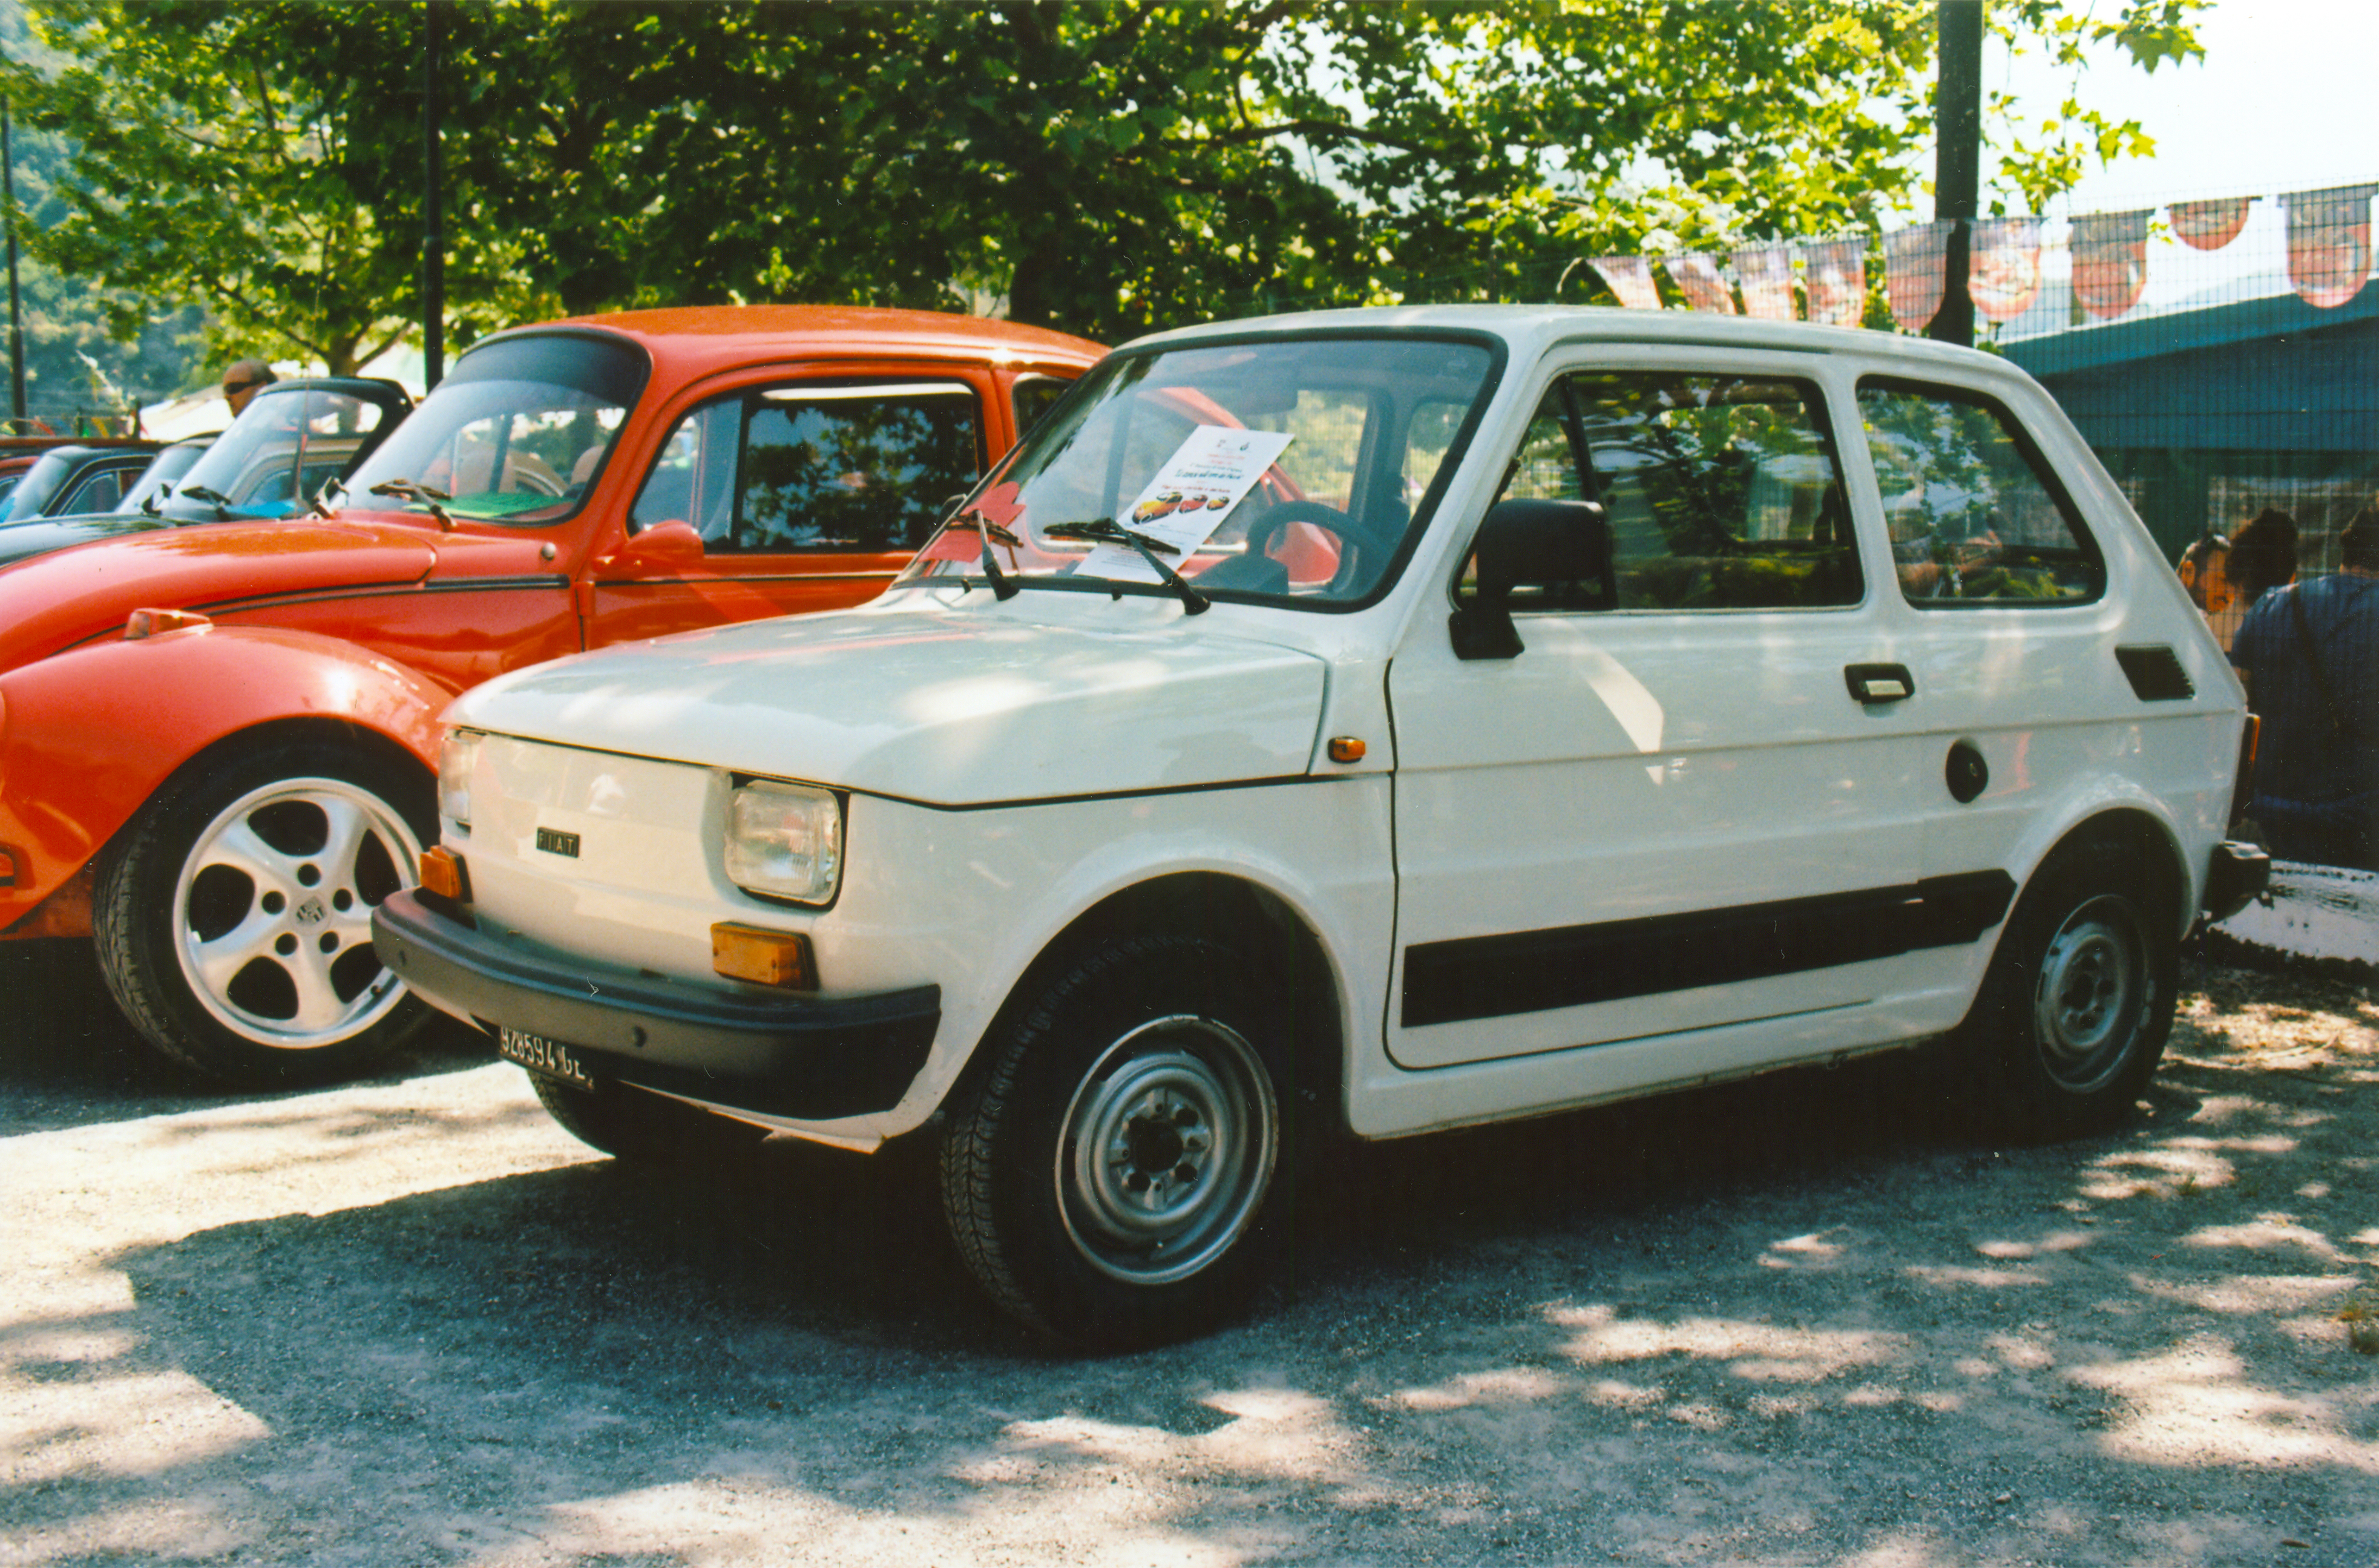 1984 Fiat 126 Personal 4 650 by GladiatorRomanus on DeviantArt